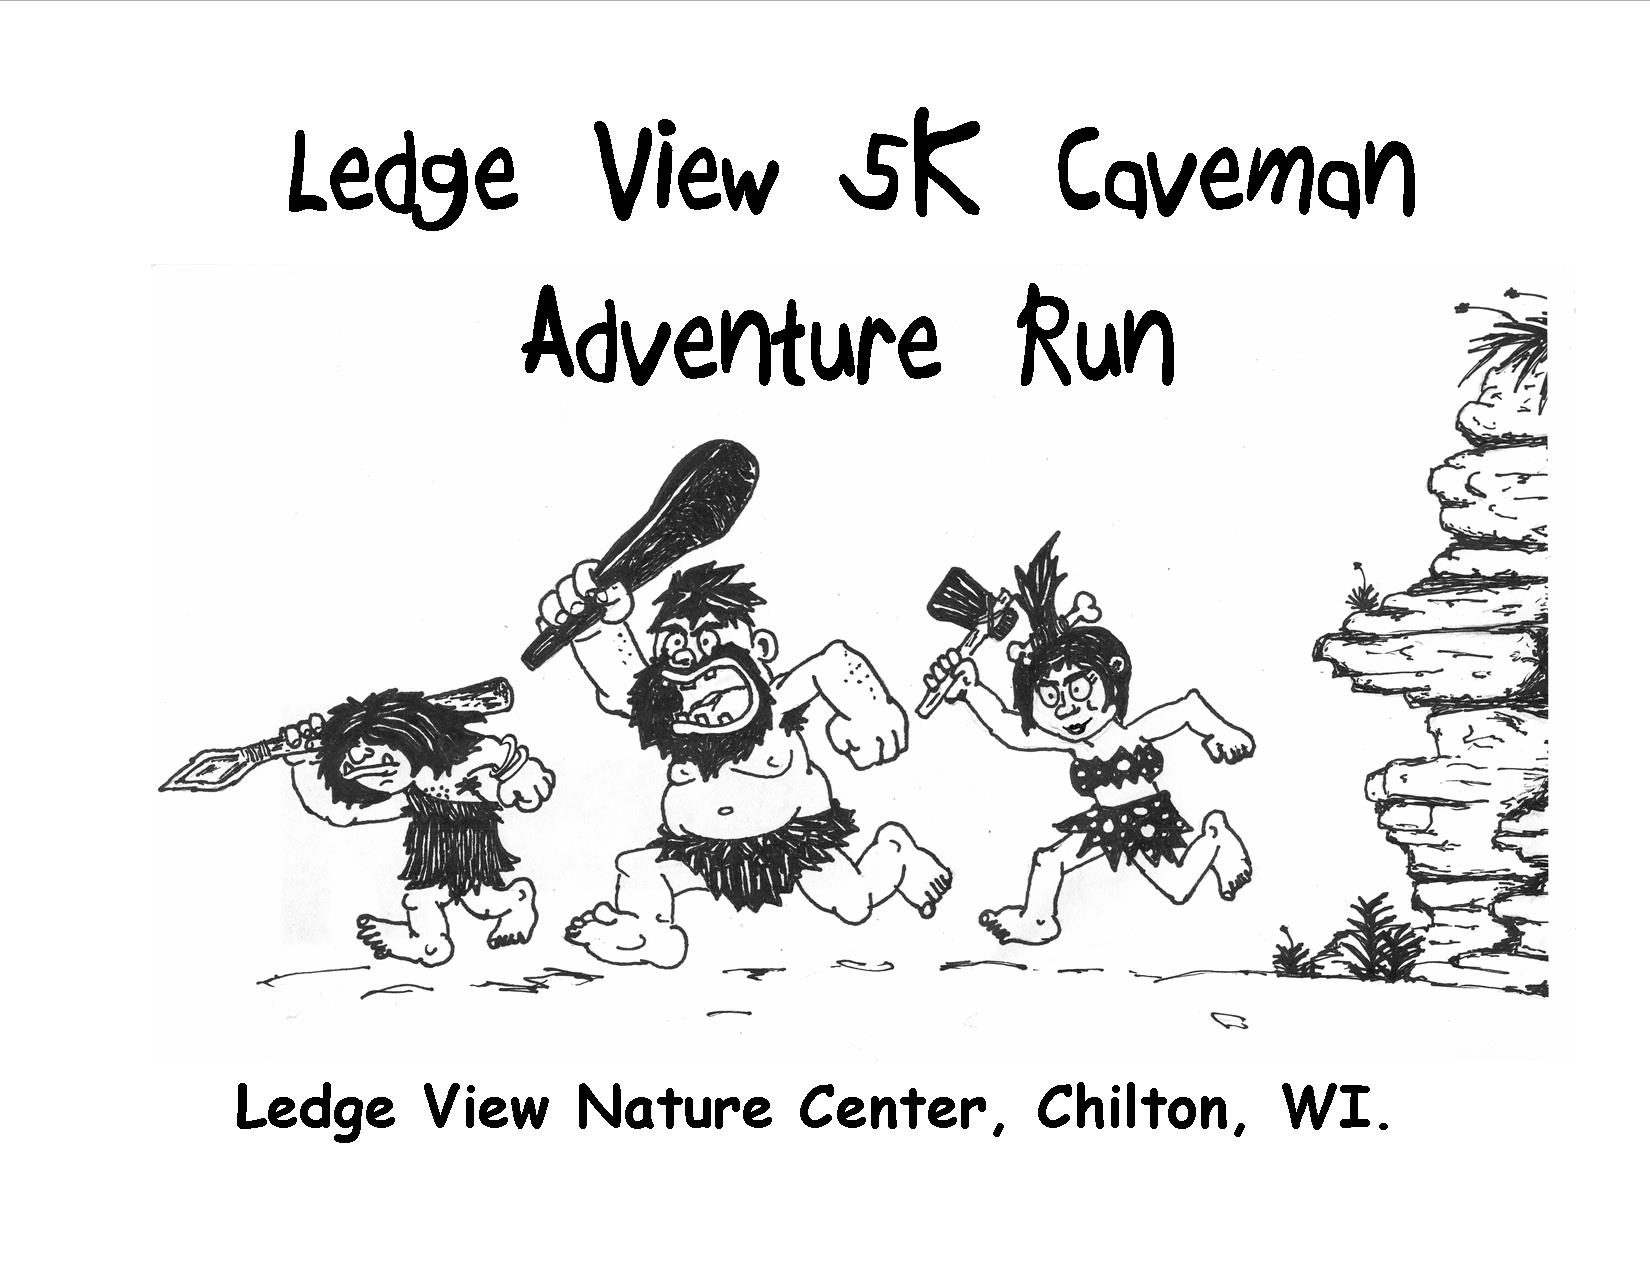 Ledge View 5K Caveman Adventure Run logo on RaceRaves